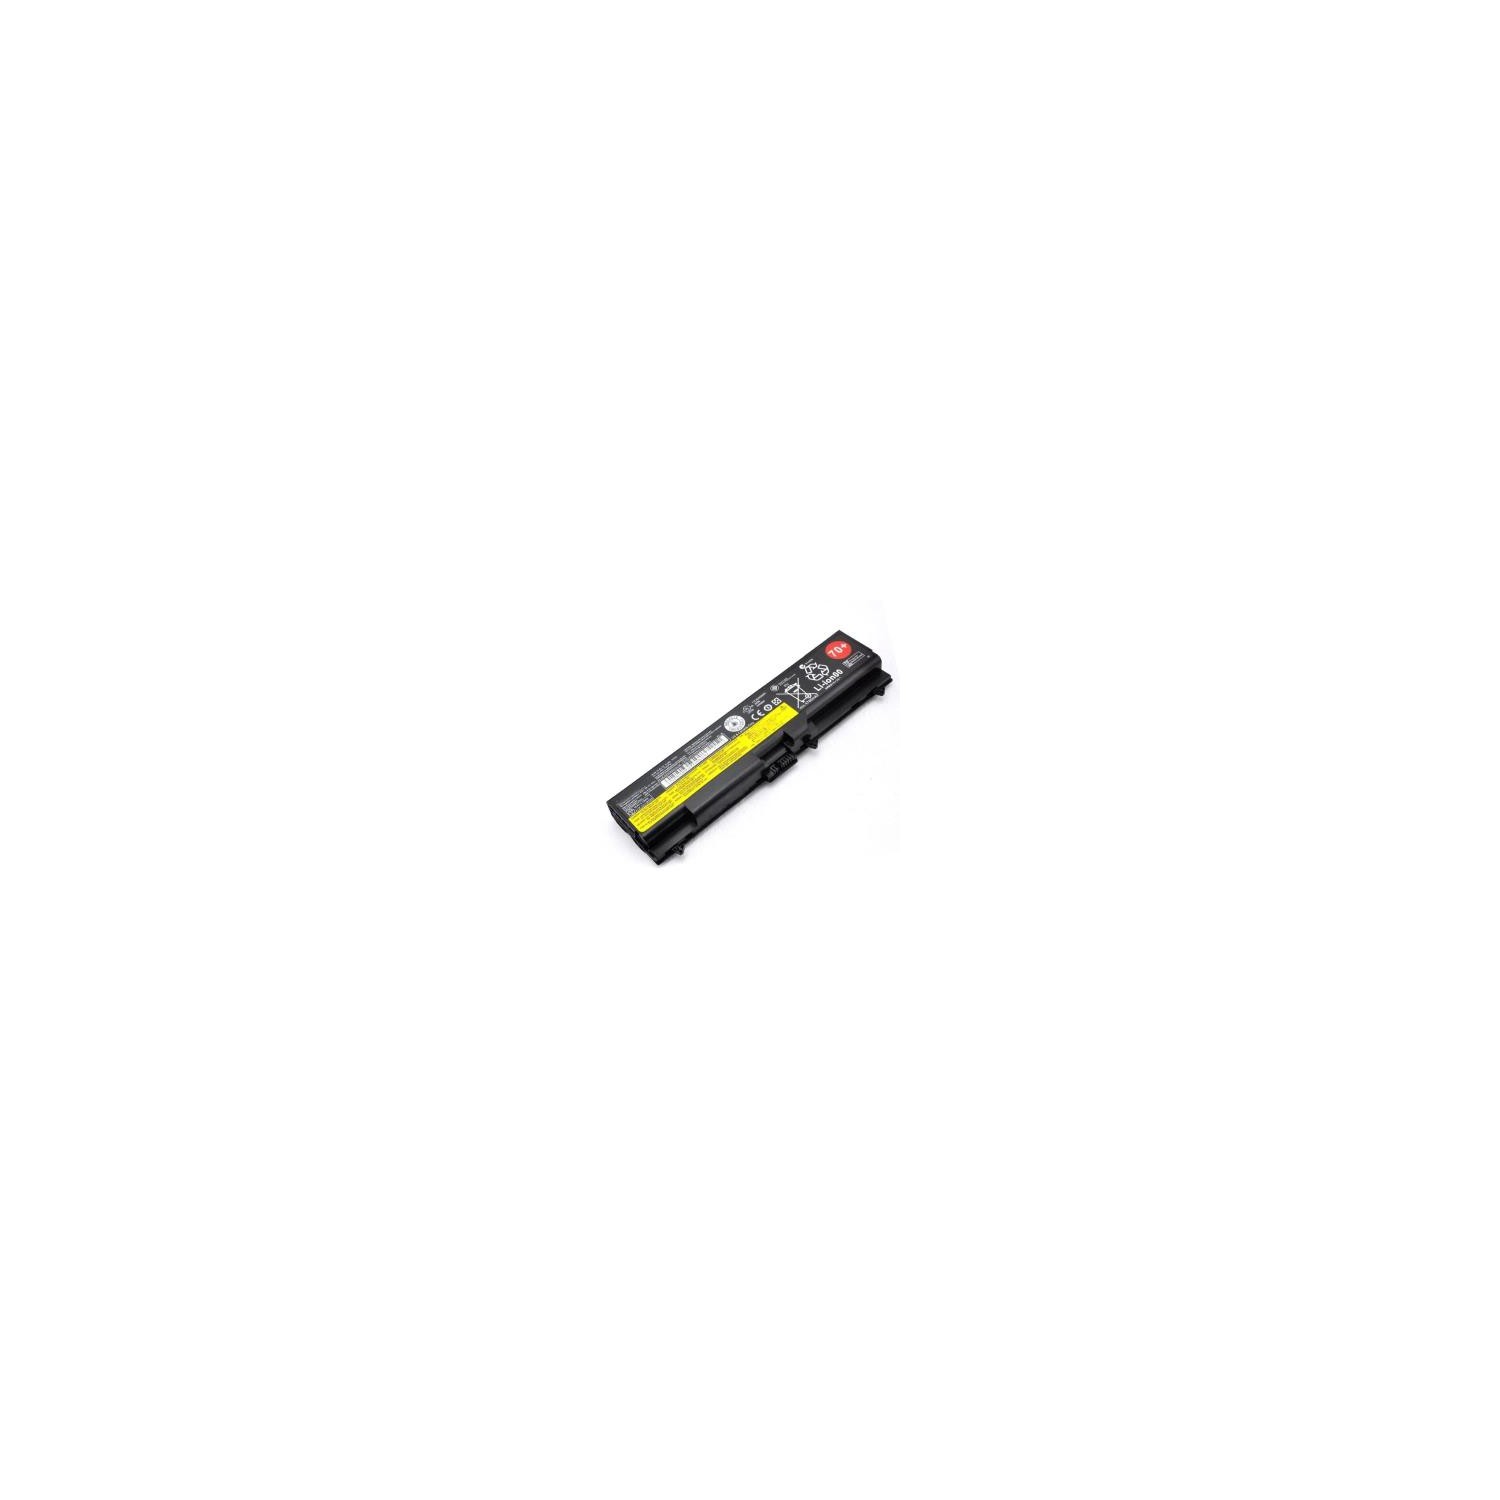 eGALAXY® Battery for Lenovo L430 L530 T430 T530 W530 42T4235 51J0499 (LN246)